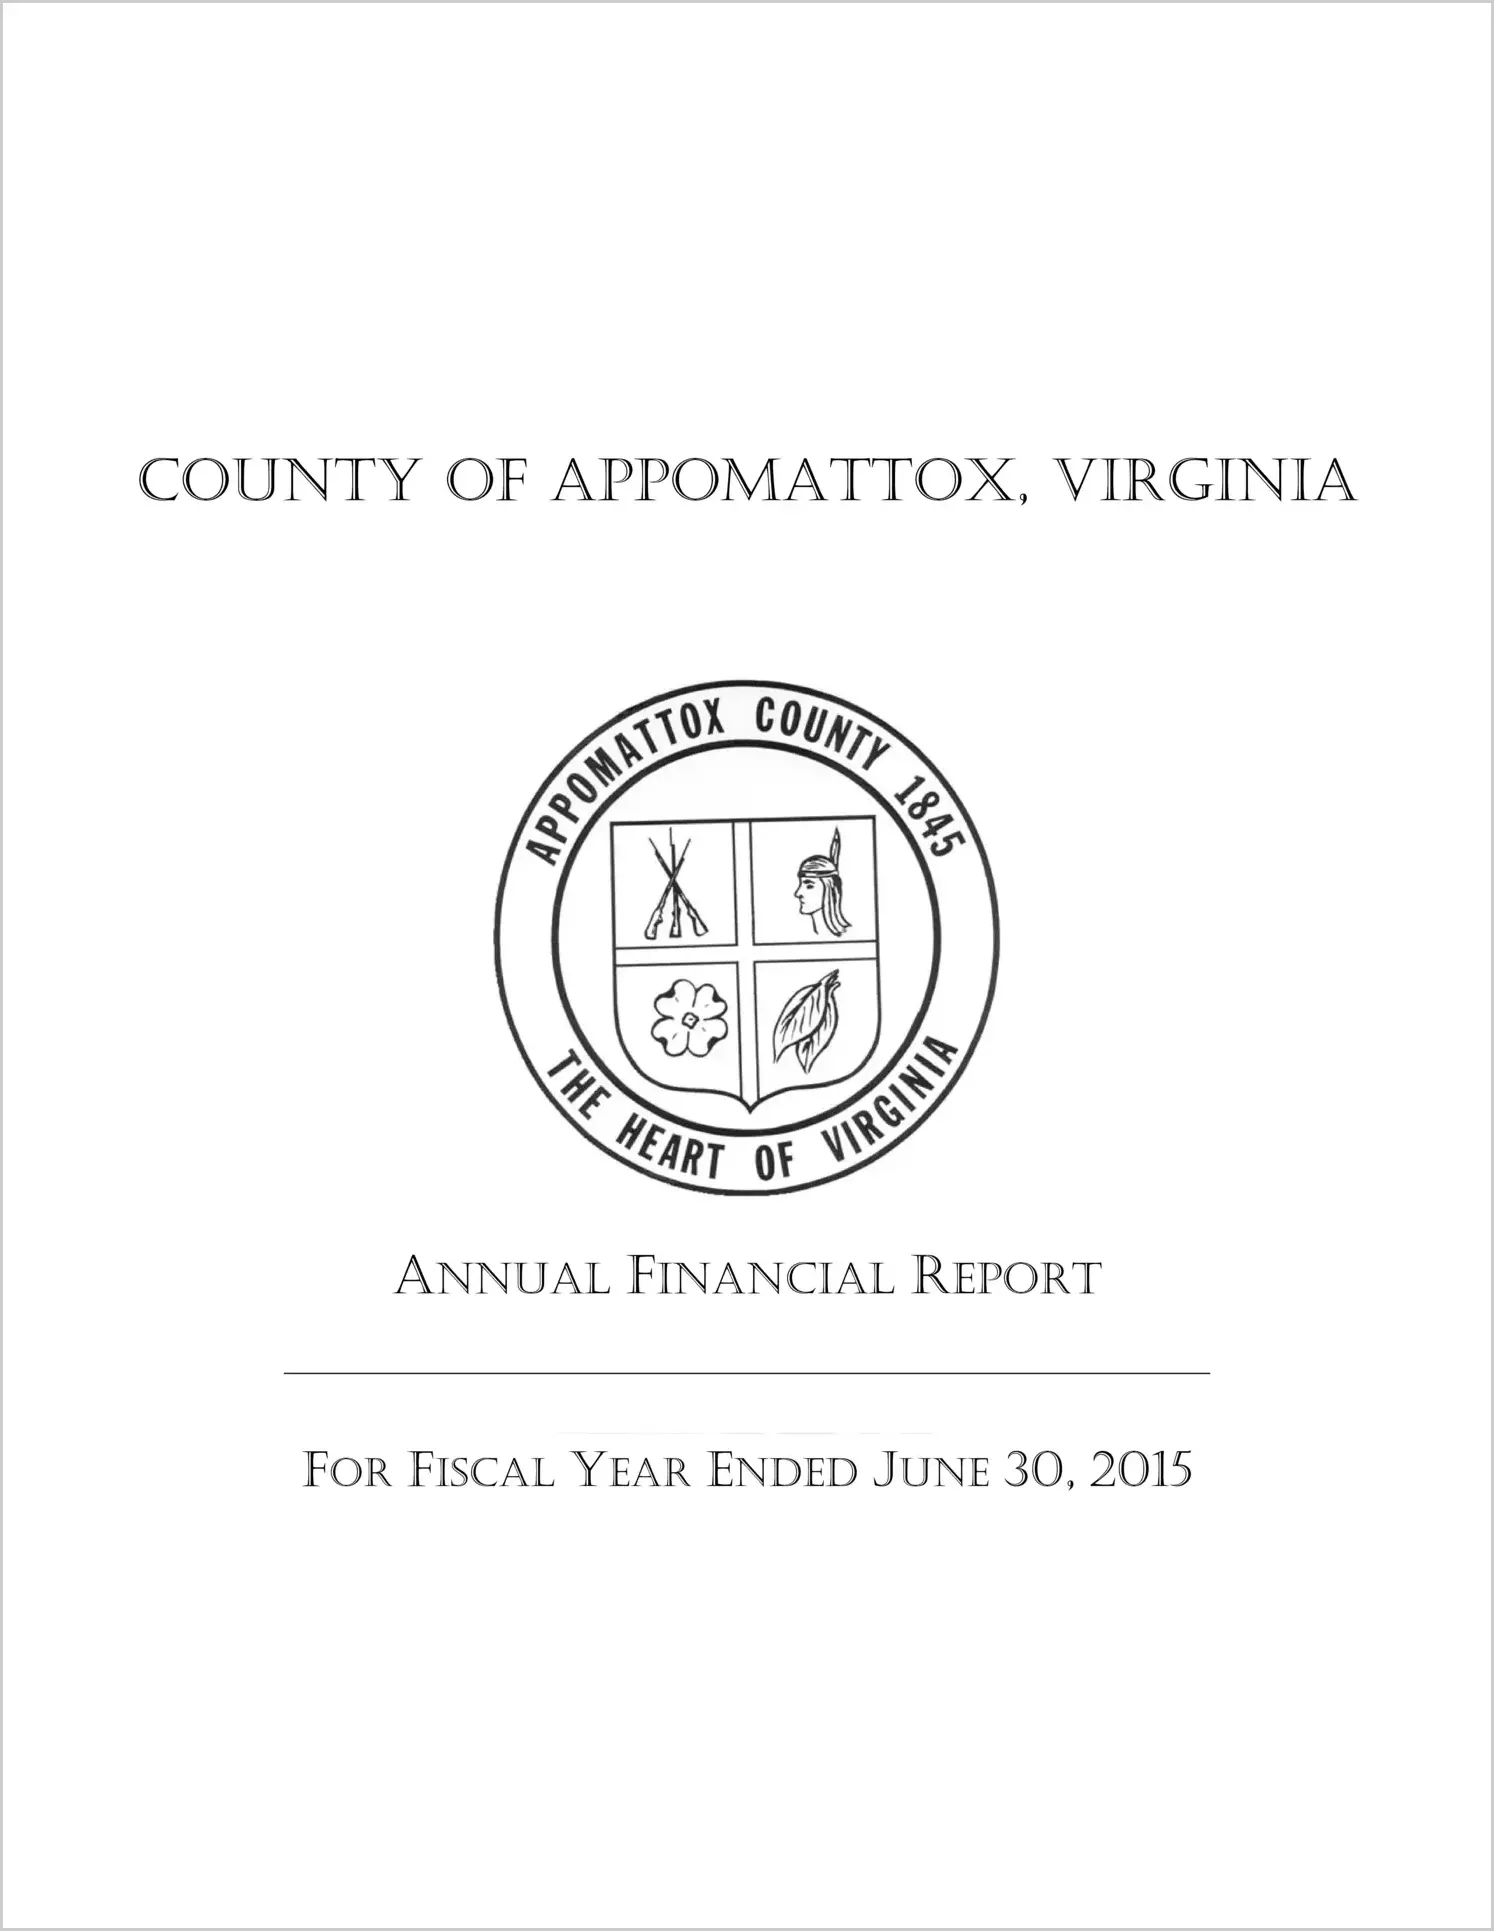 2015 Annual Financial Report for County of Appomattox